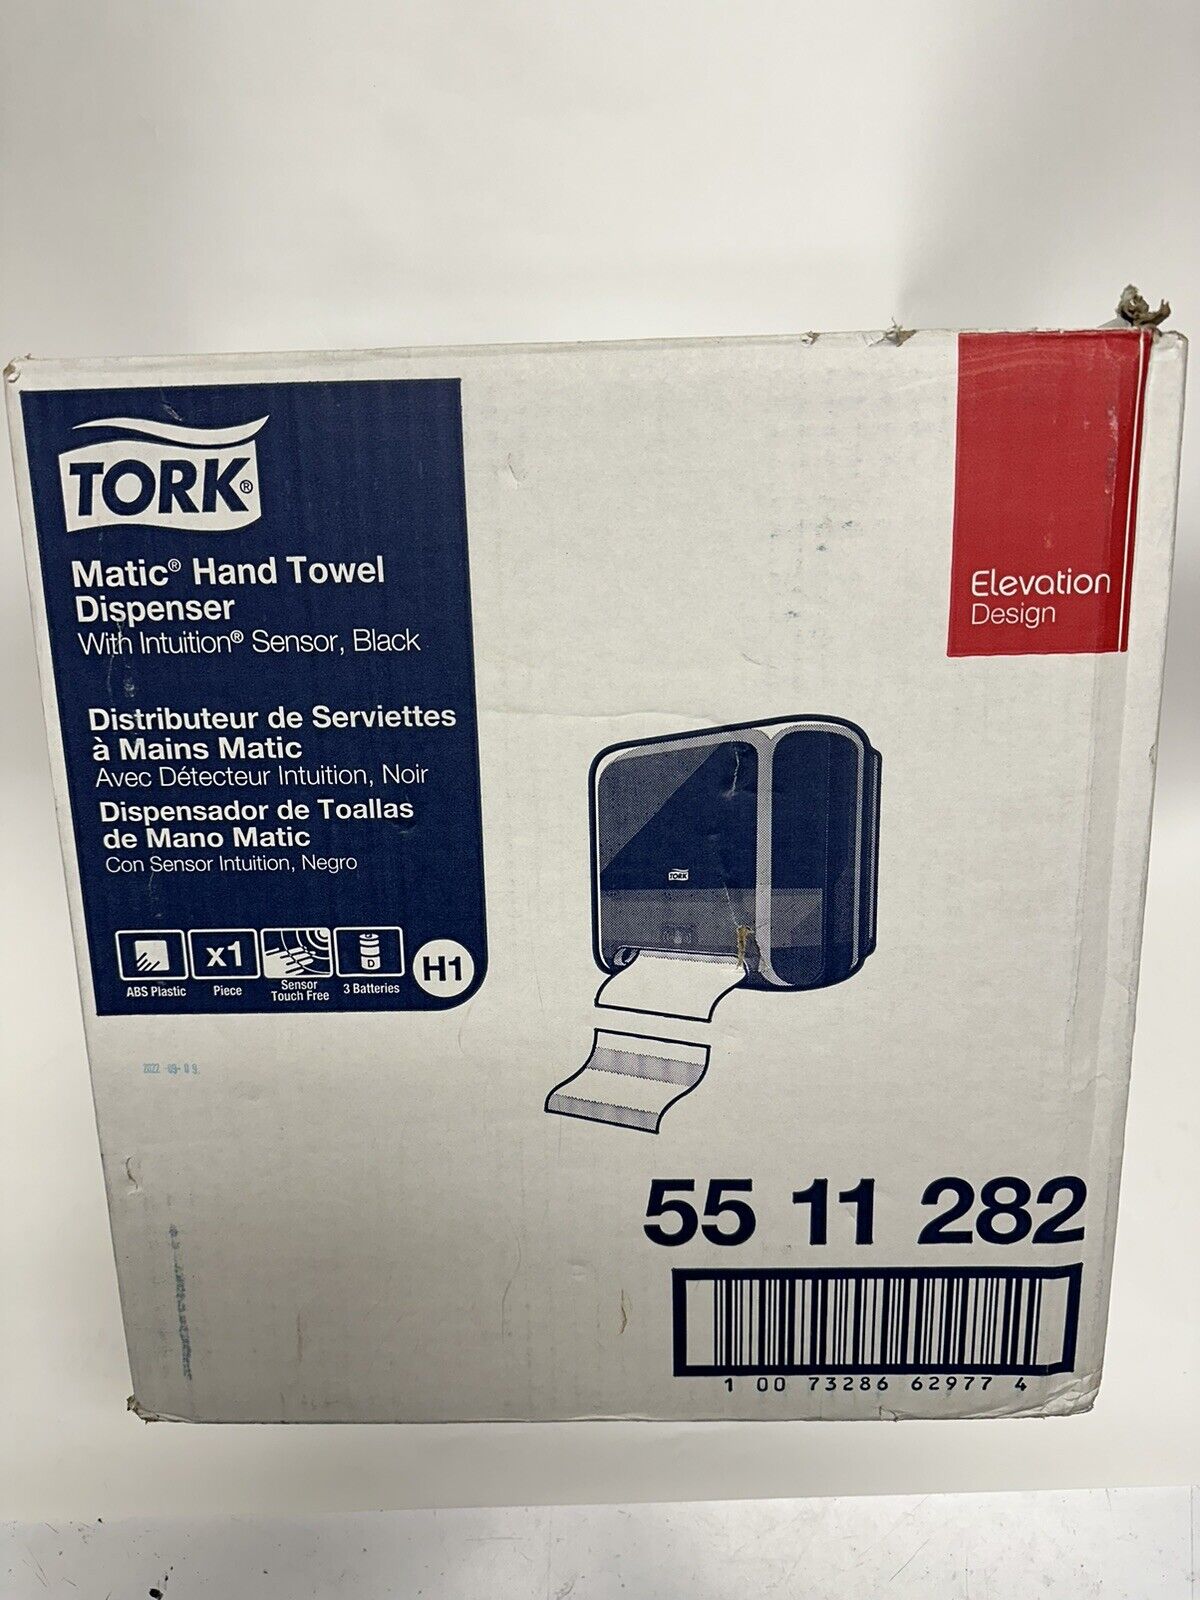 New Tork Matic Hand Towel Roll Dispenser w/ Intuition Sensor 5511282, Elevation